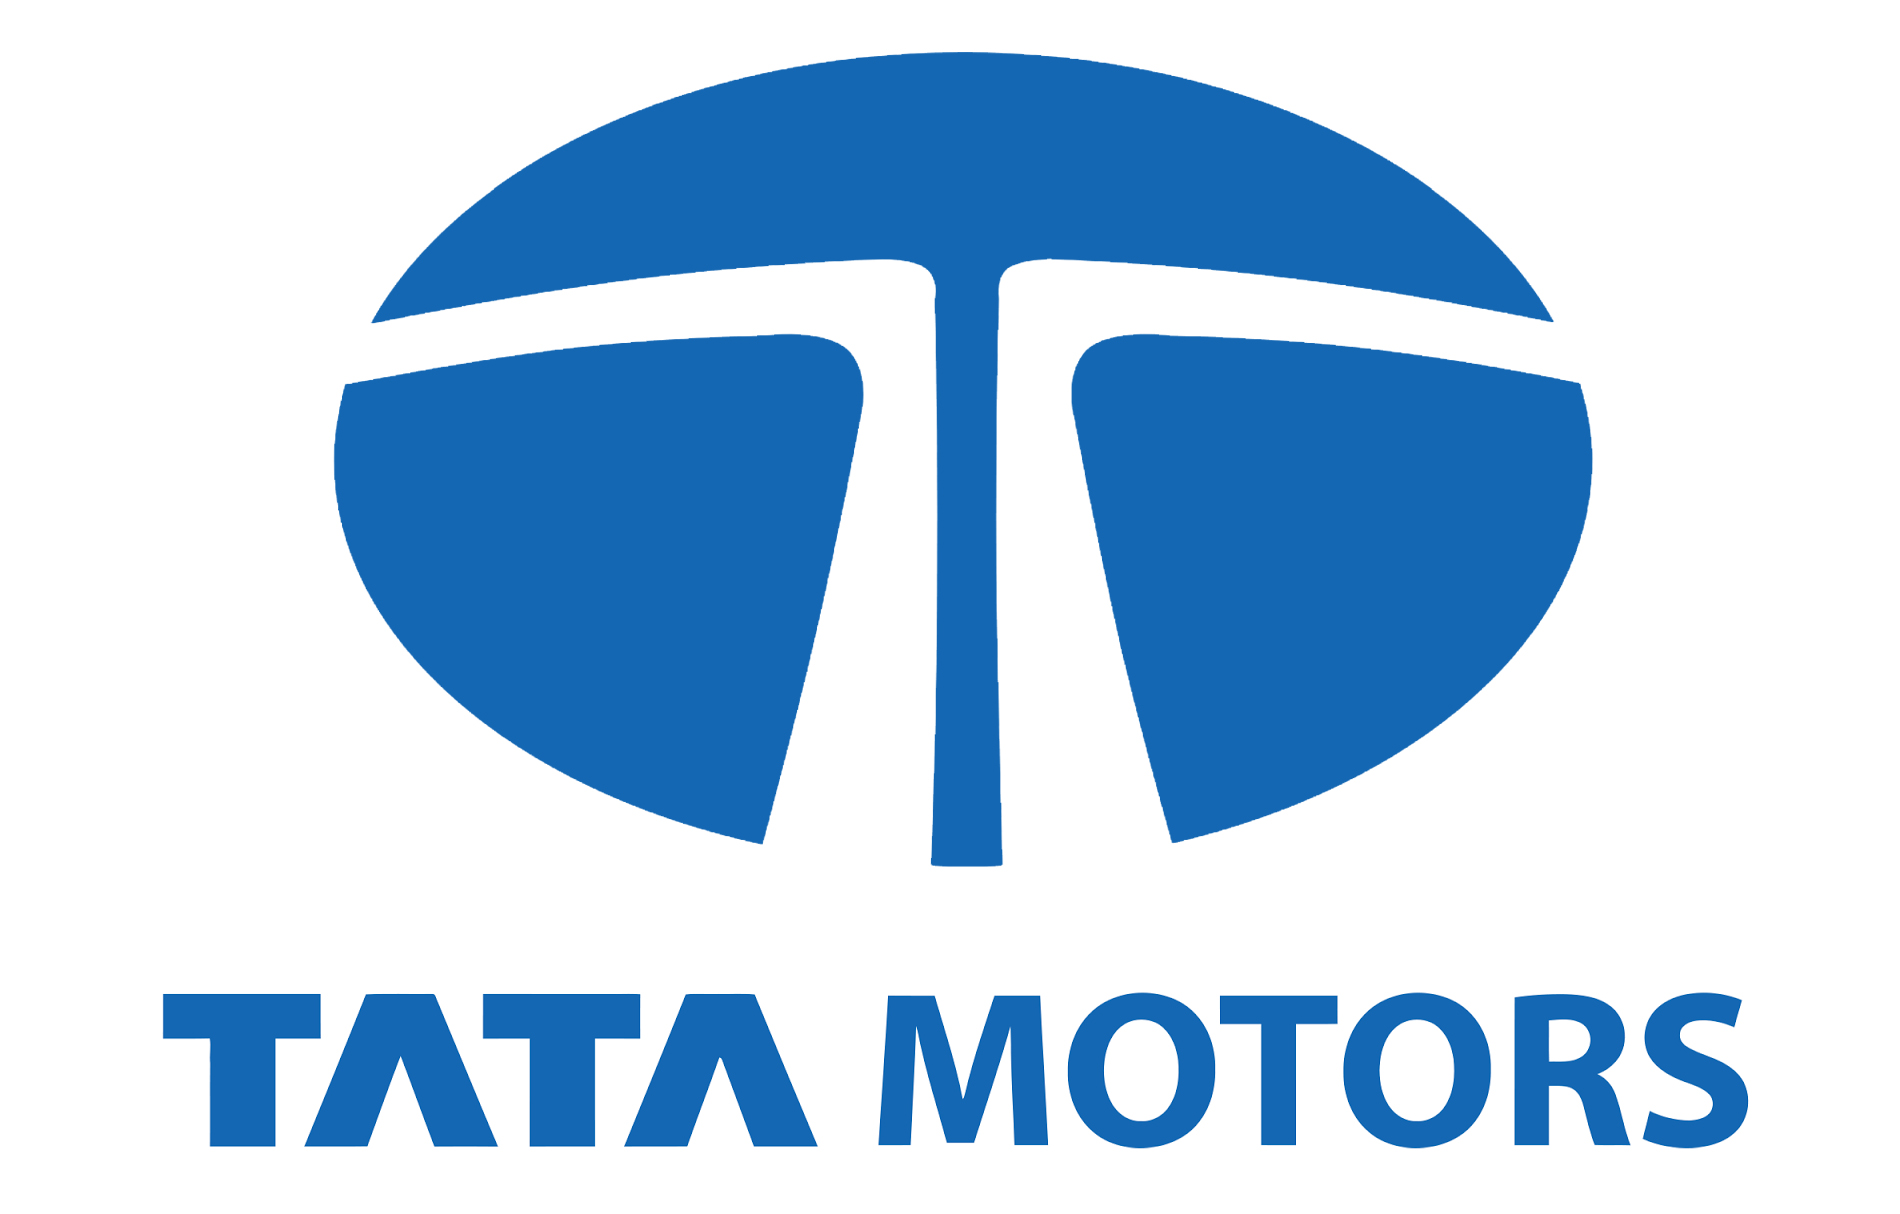 Tata Motors Cars Showroom - J V Motors - Logo